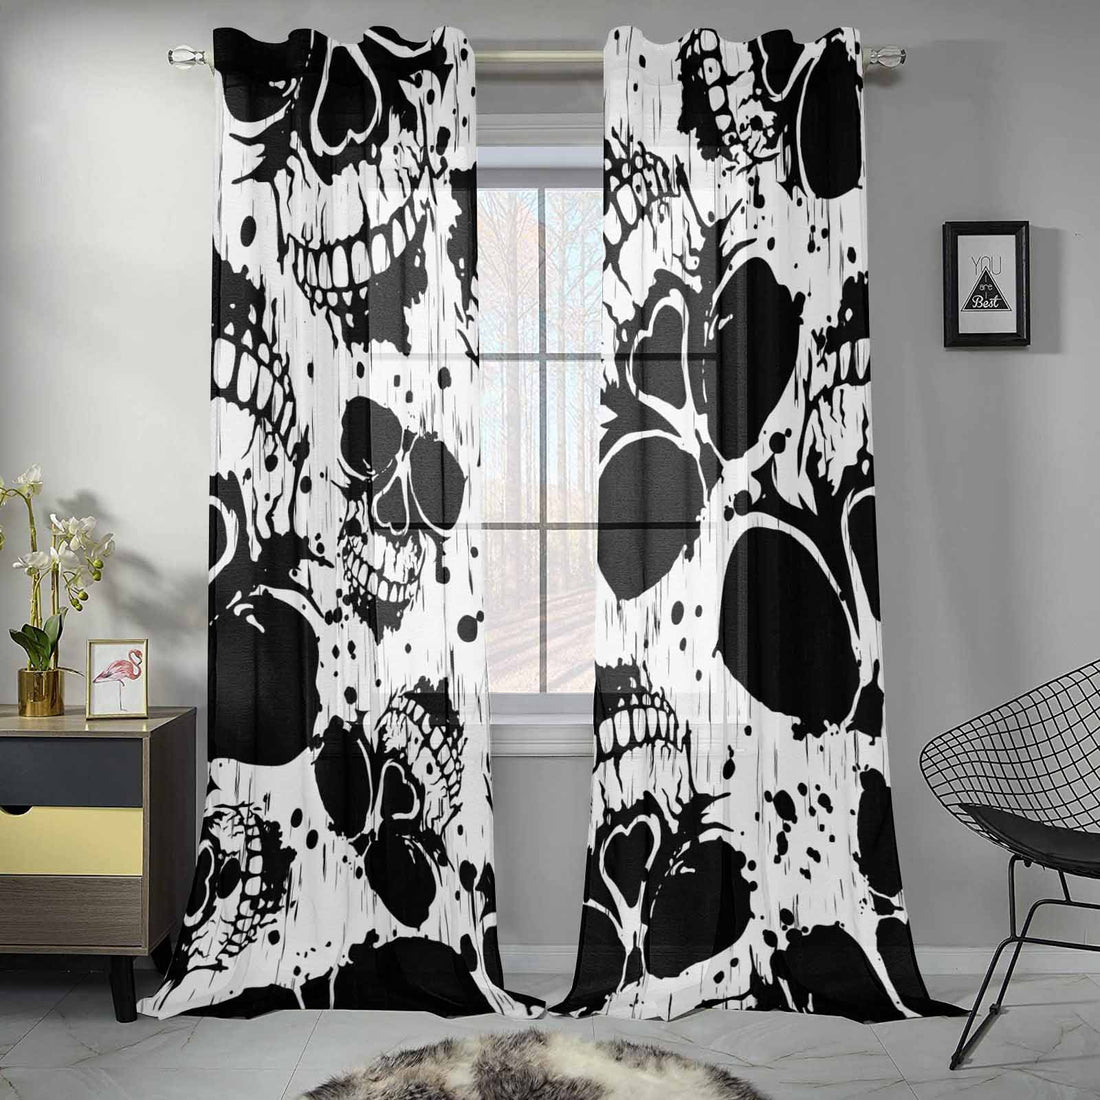 Kate McEnroe New York Sheer 2 Panel Window Curtains in Grunge Halloween SkullsWindow CurtainsDG1170603DXH7857D